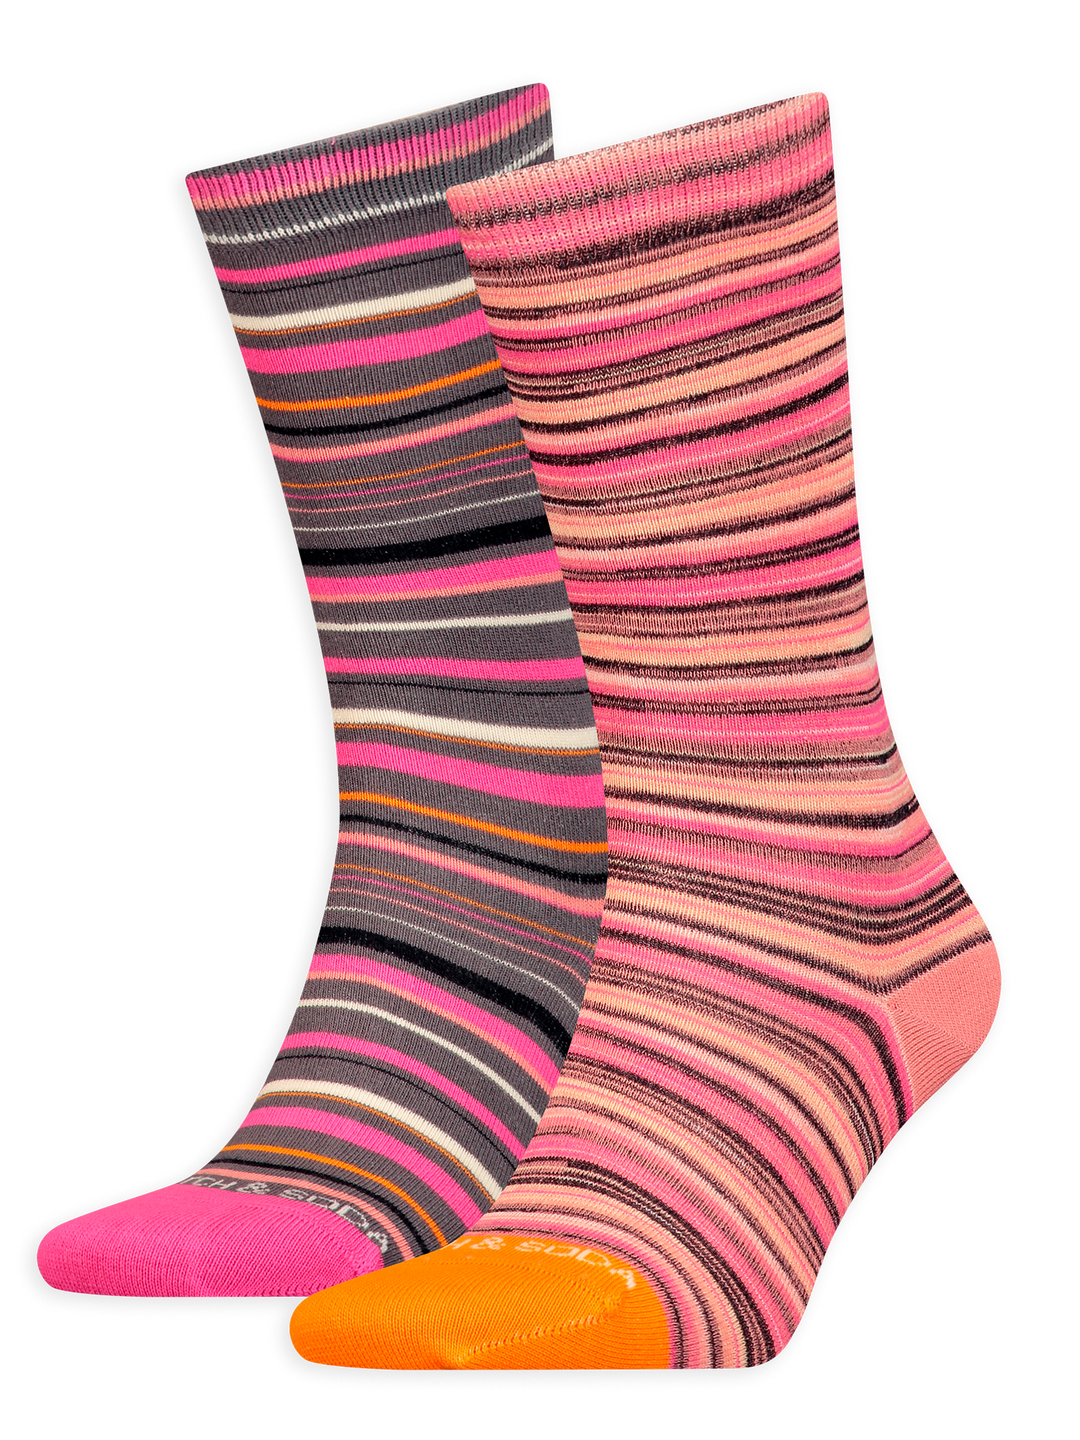 Stripe on Stripe Socks 2 Pack in Pink Grey | Buster McGee